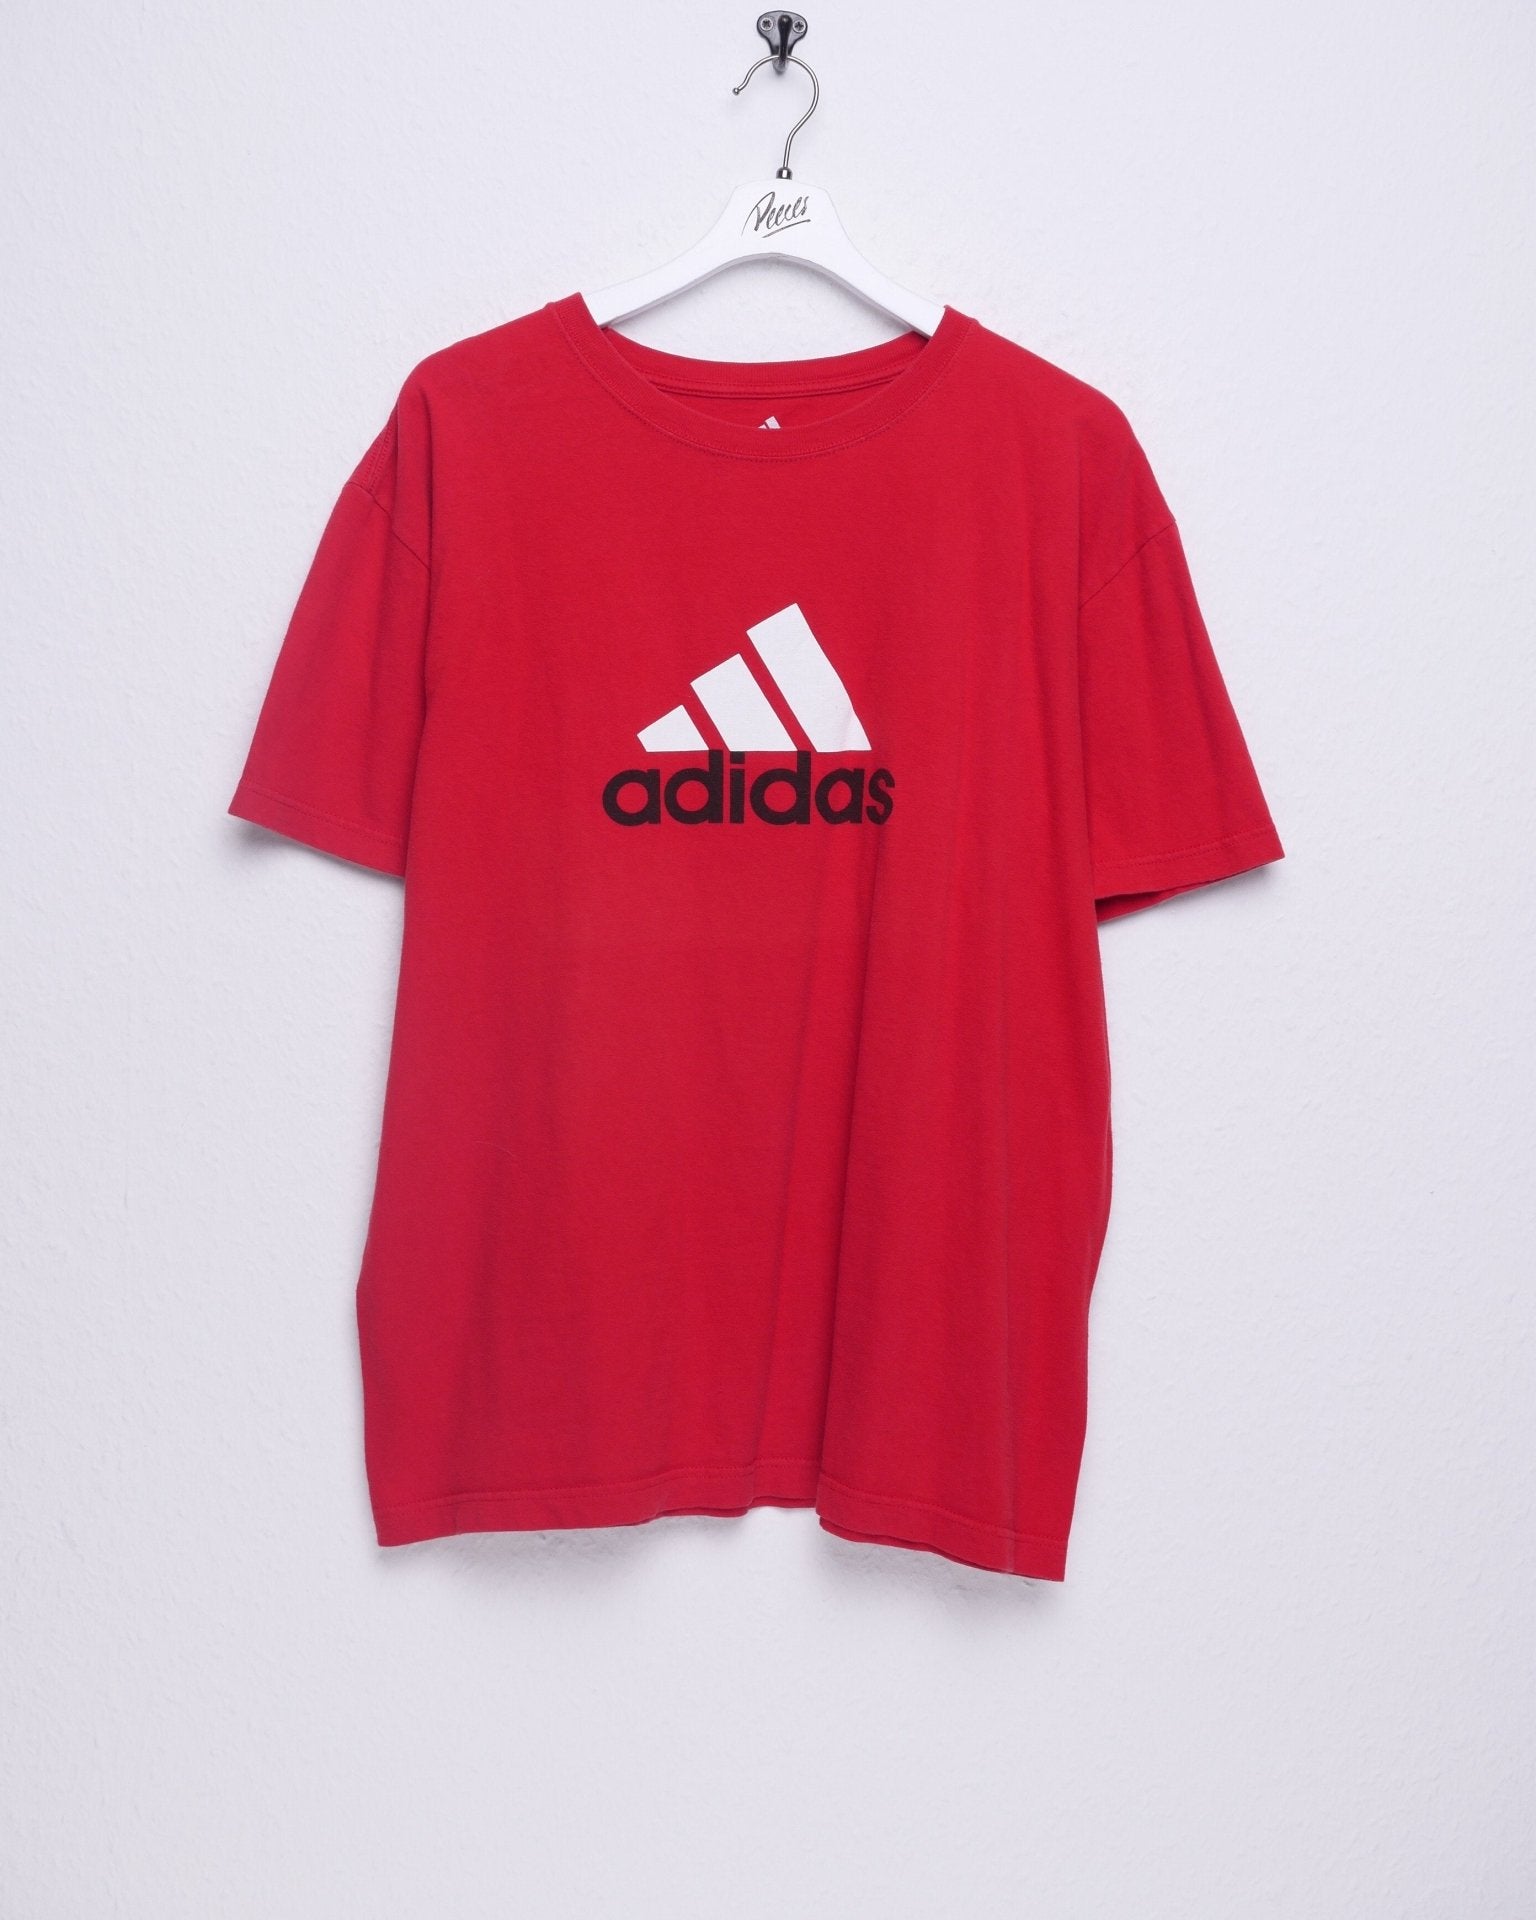 adidas big printed Logo red Shirt - Peeces